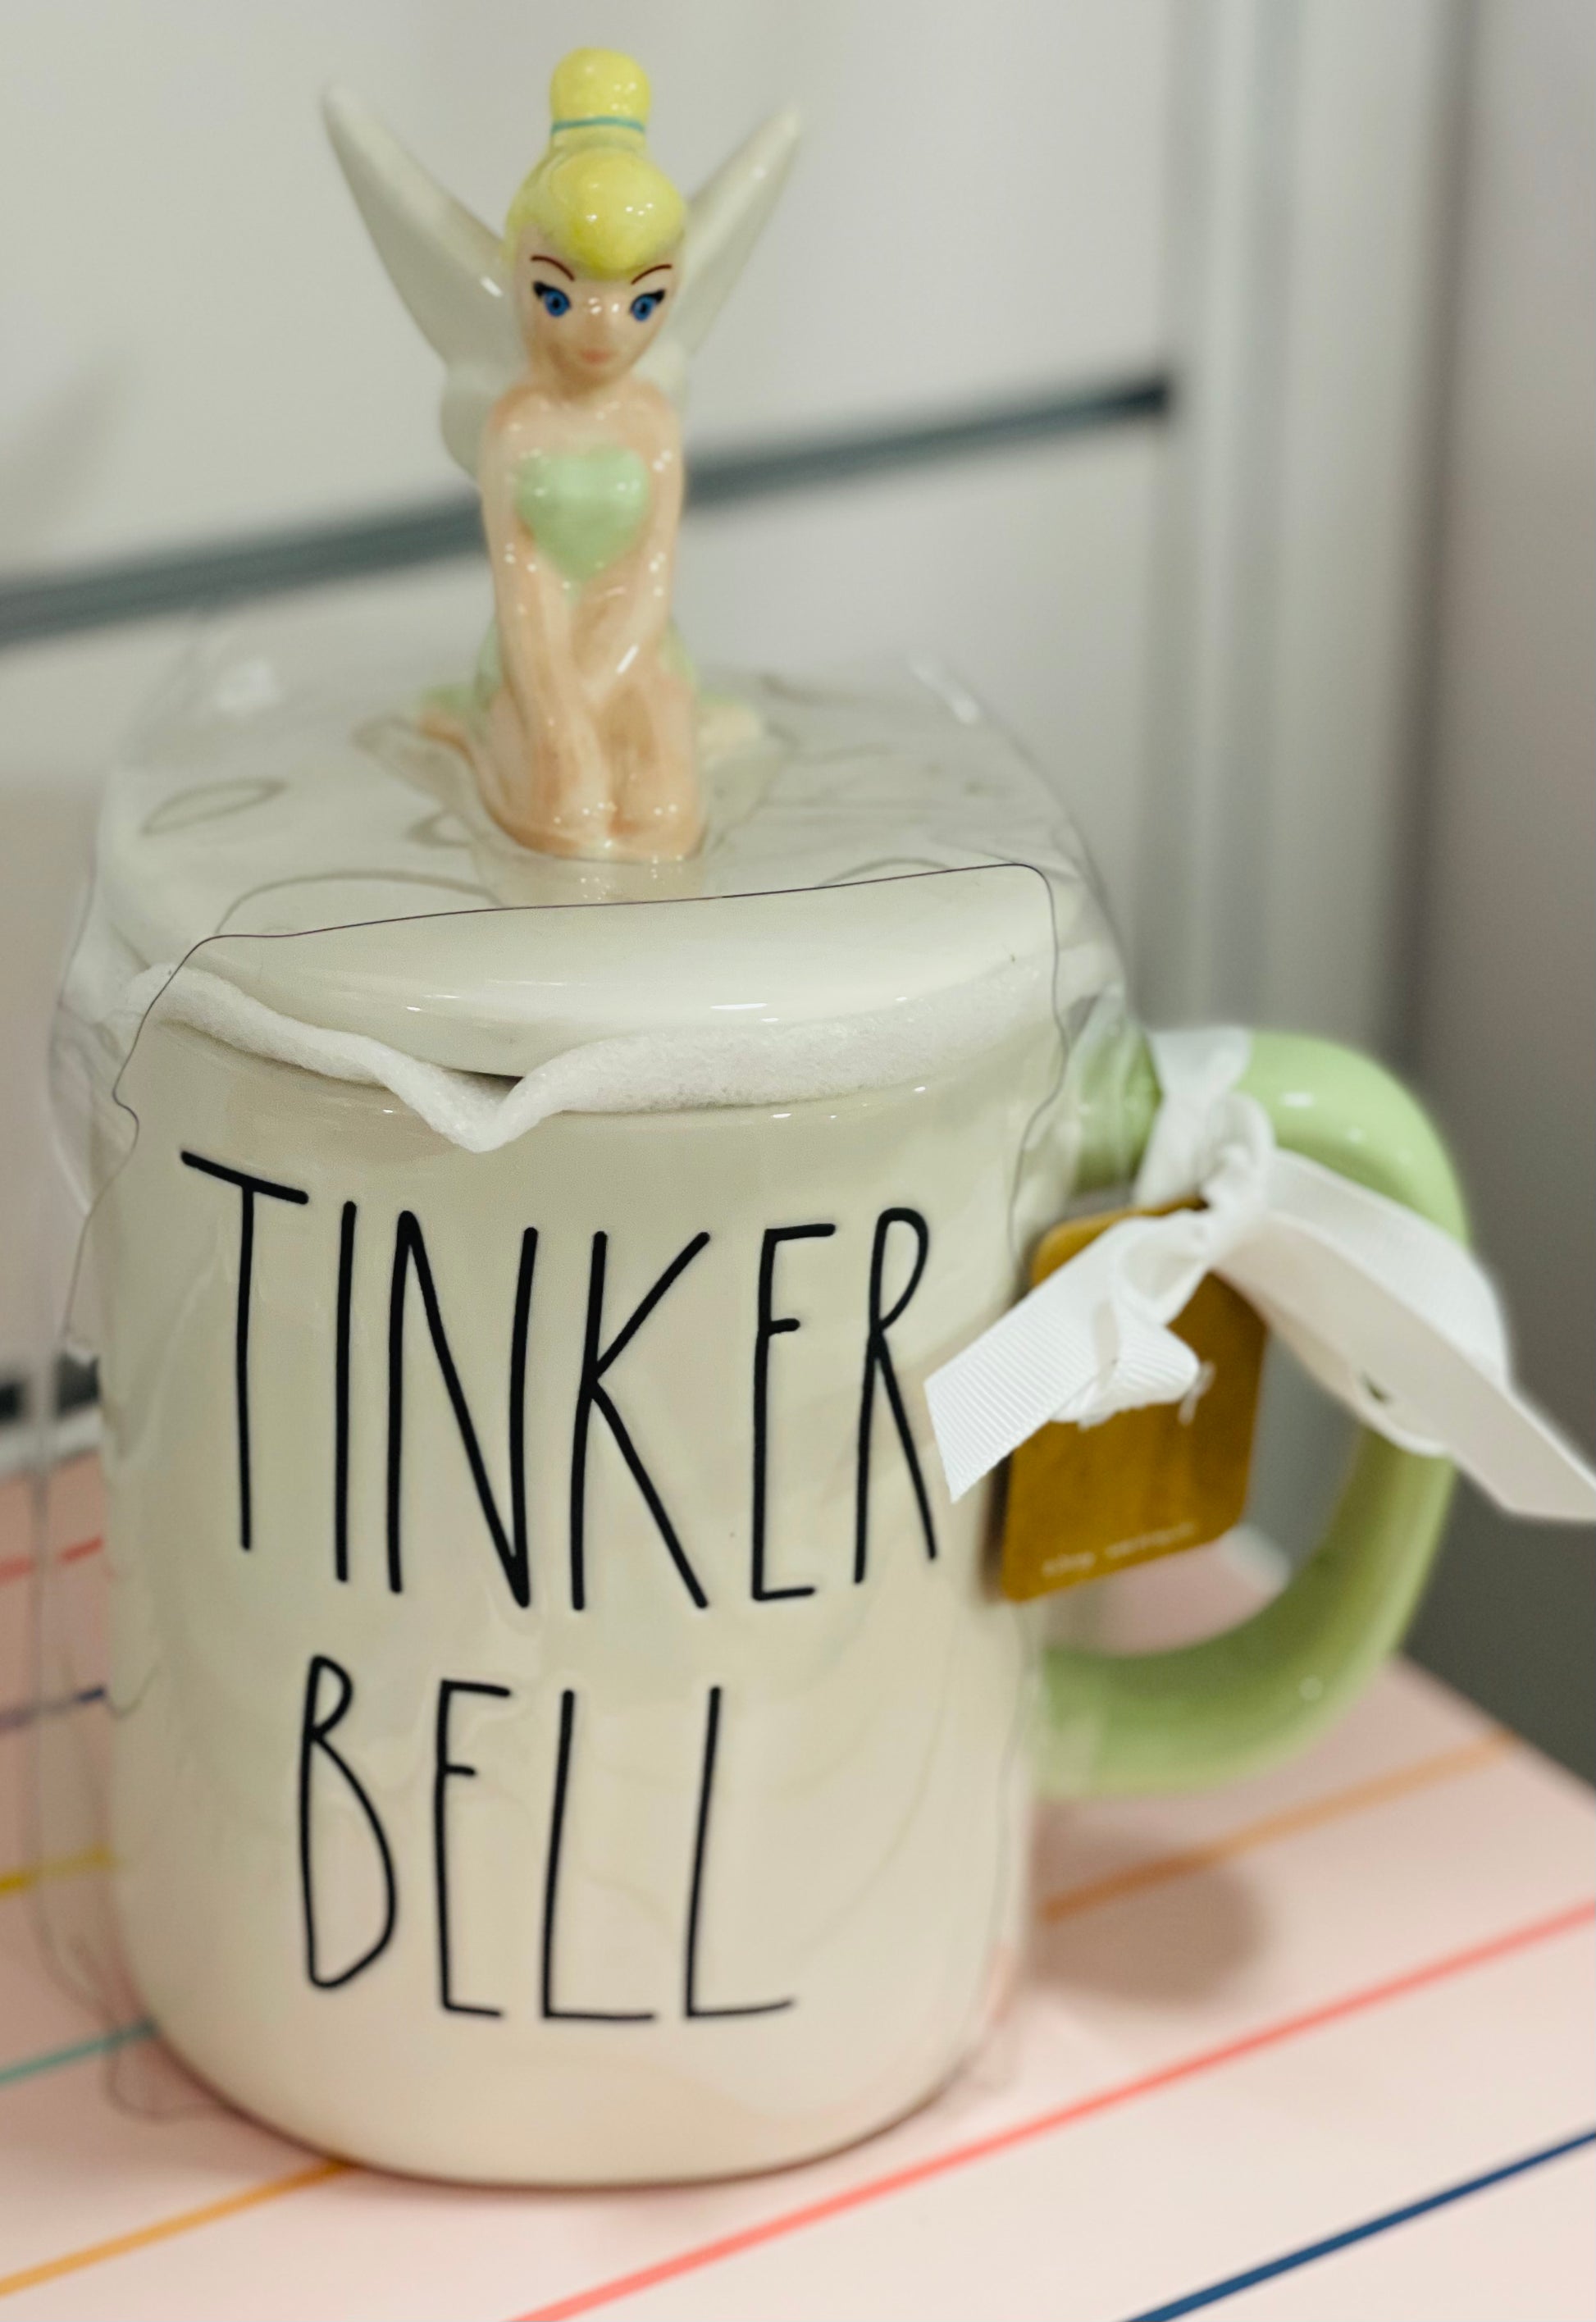 NWT Rae Dunn Disney Tinker bell Ceramic Measuring Cups